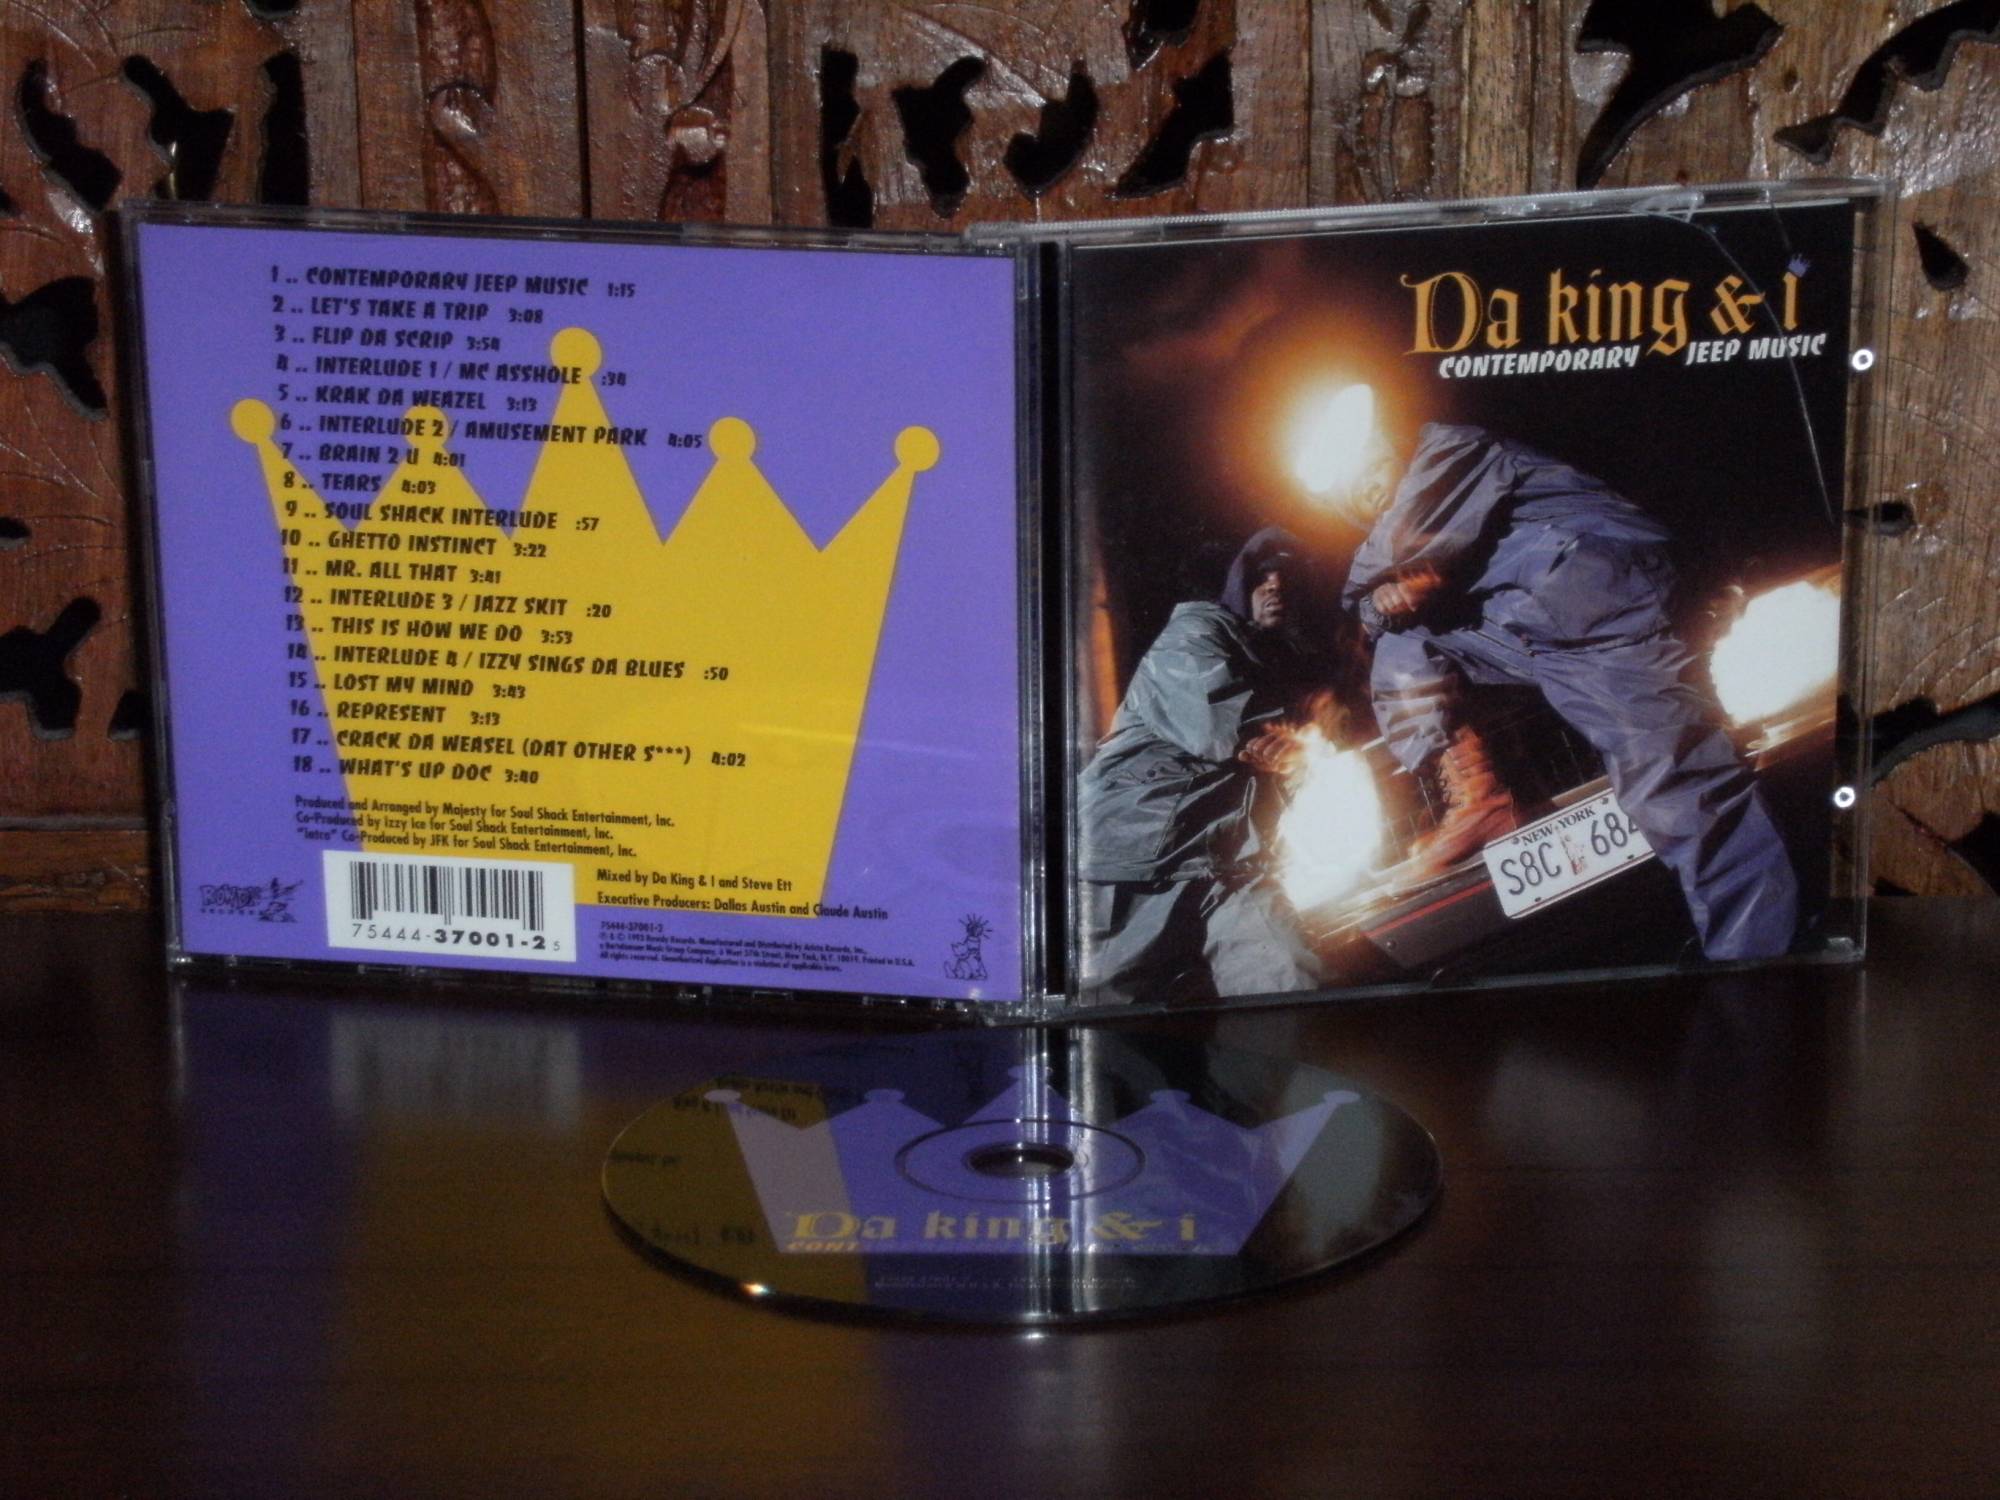 Da king and i contemporary jeep music #5